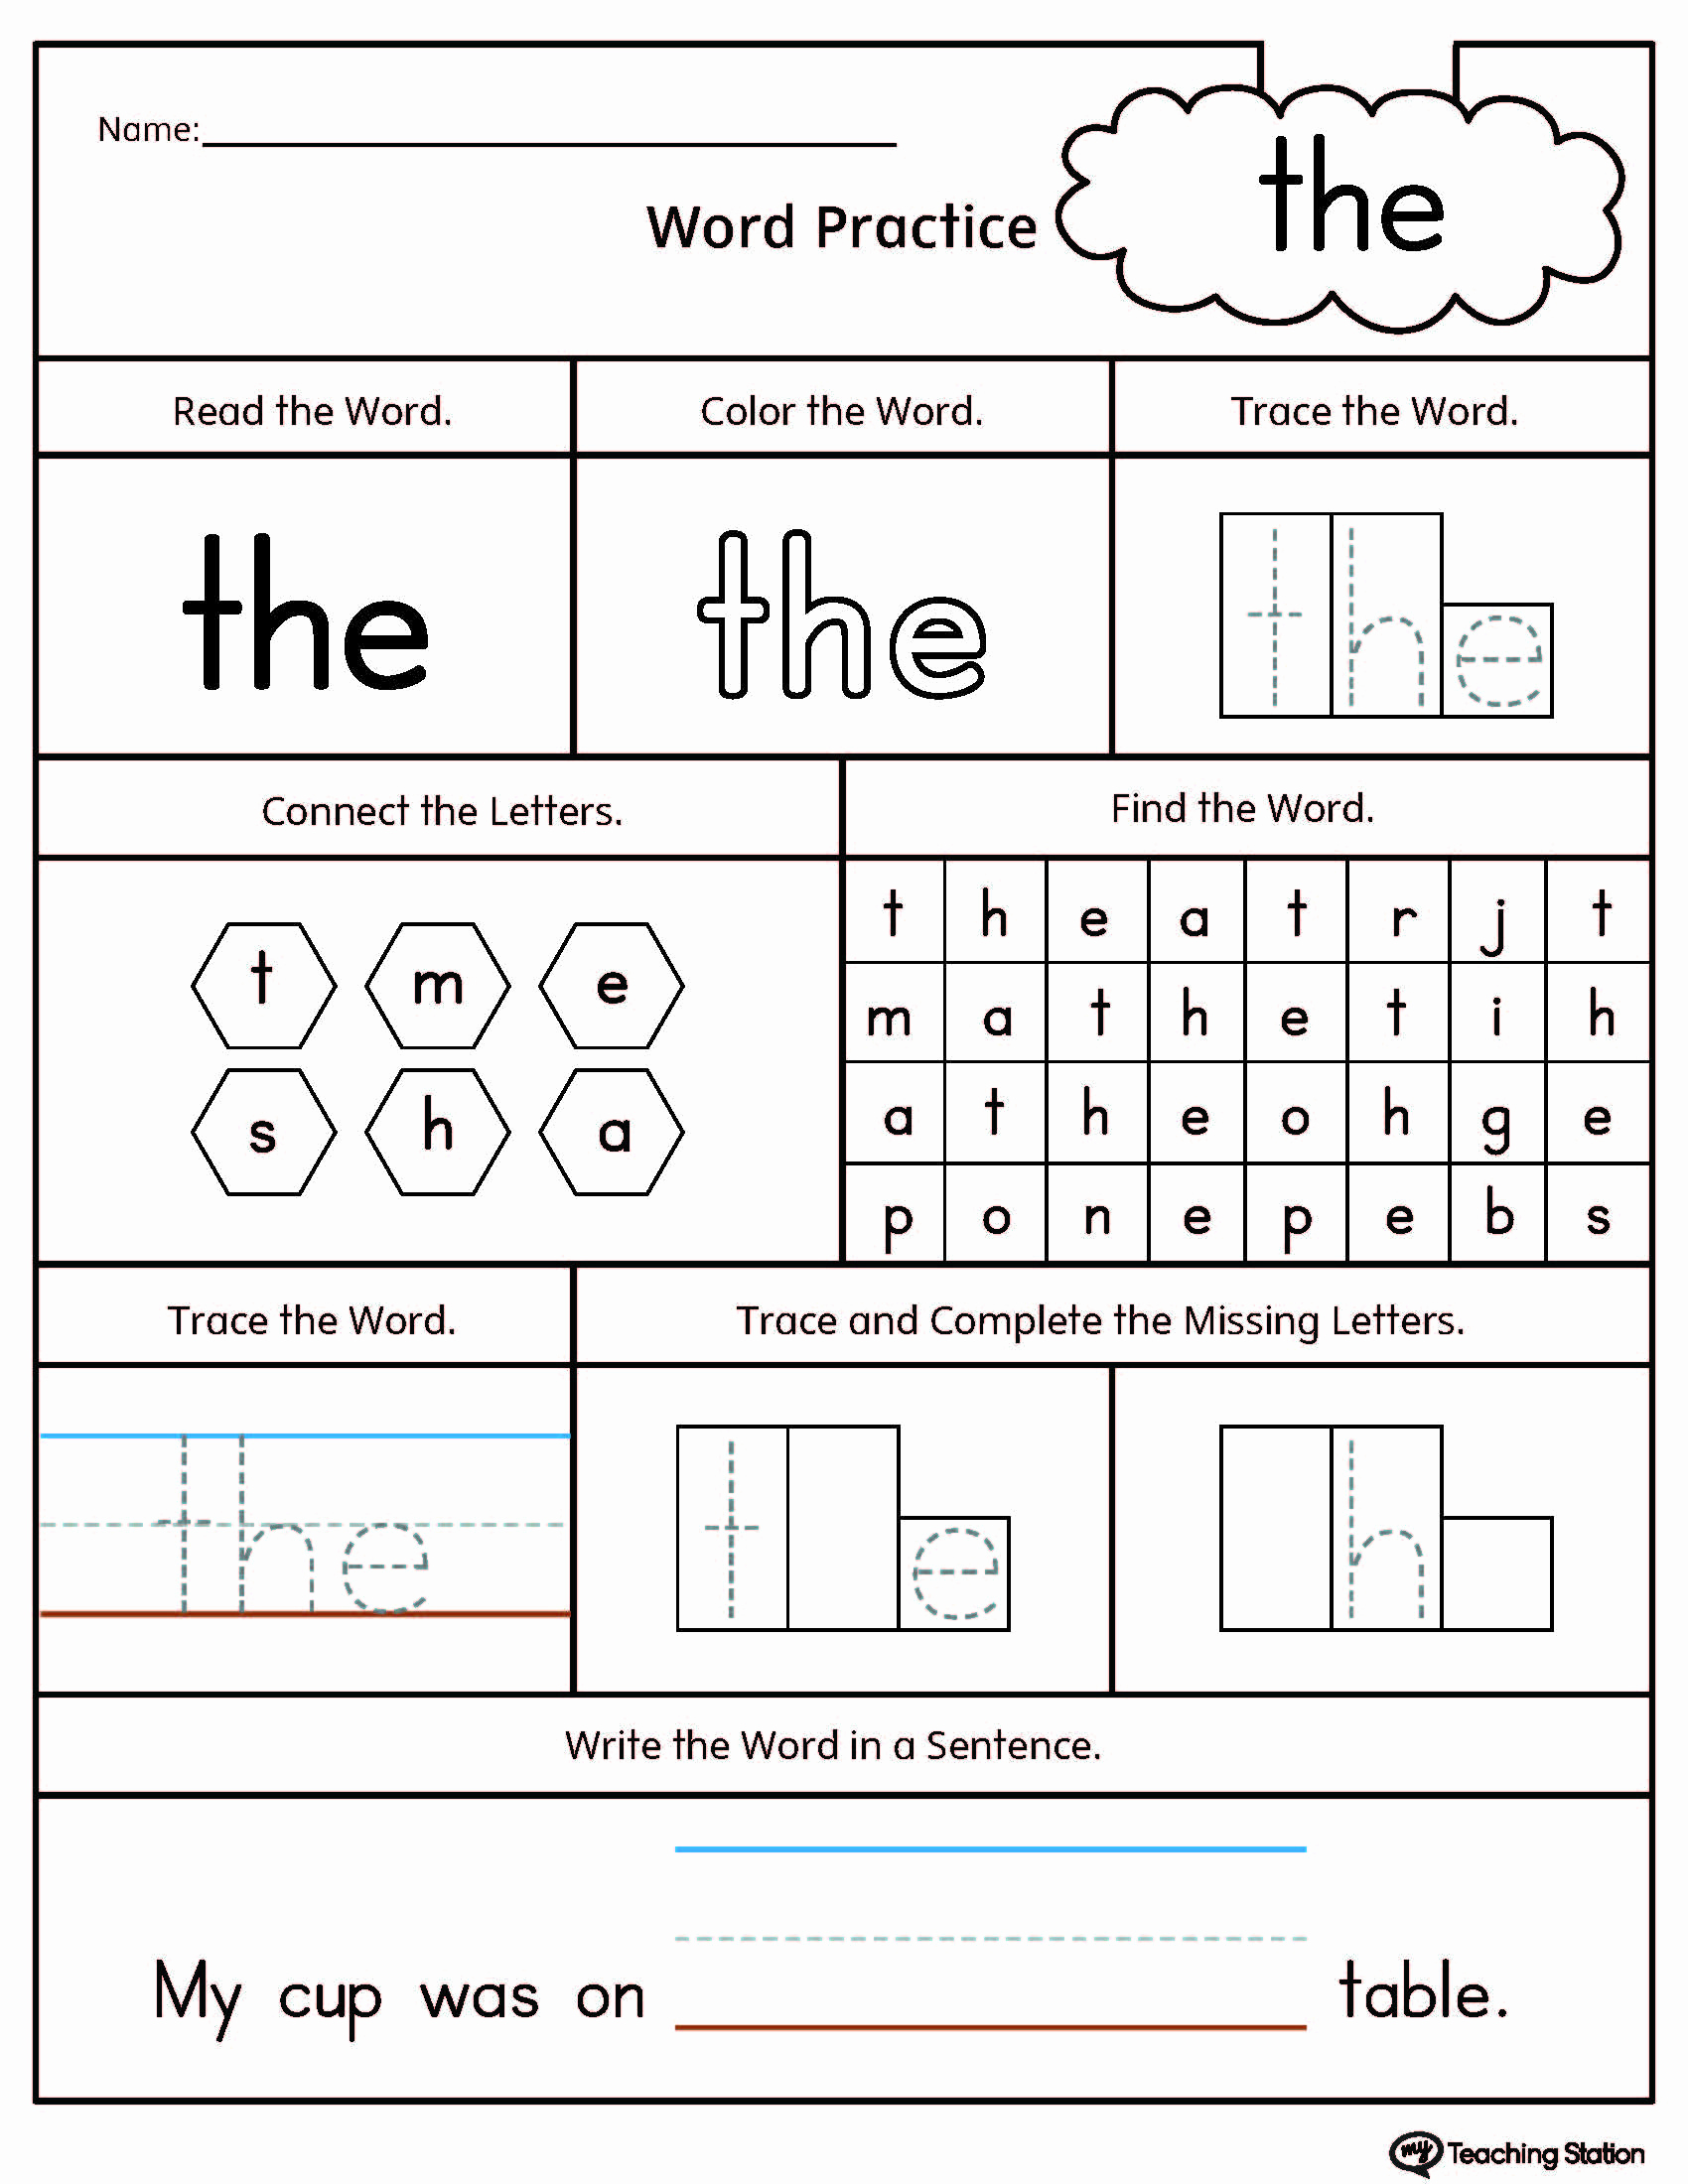 Positional Words Preschool Worksheets Fresh 20 Positional Words Preschool Worksheets